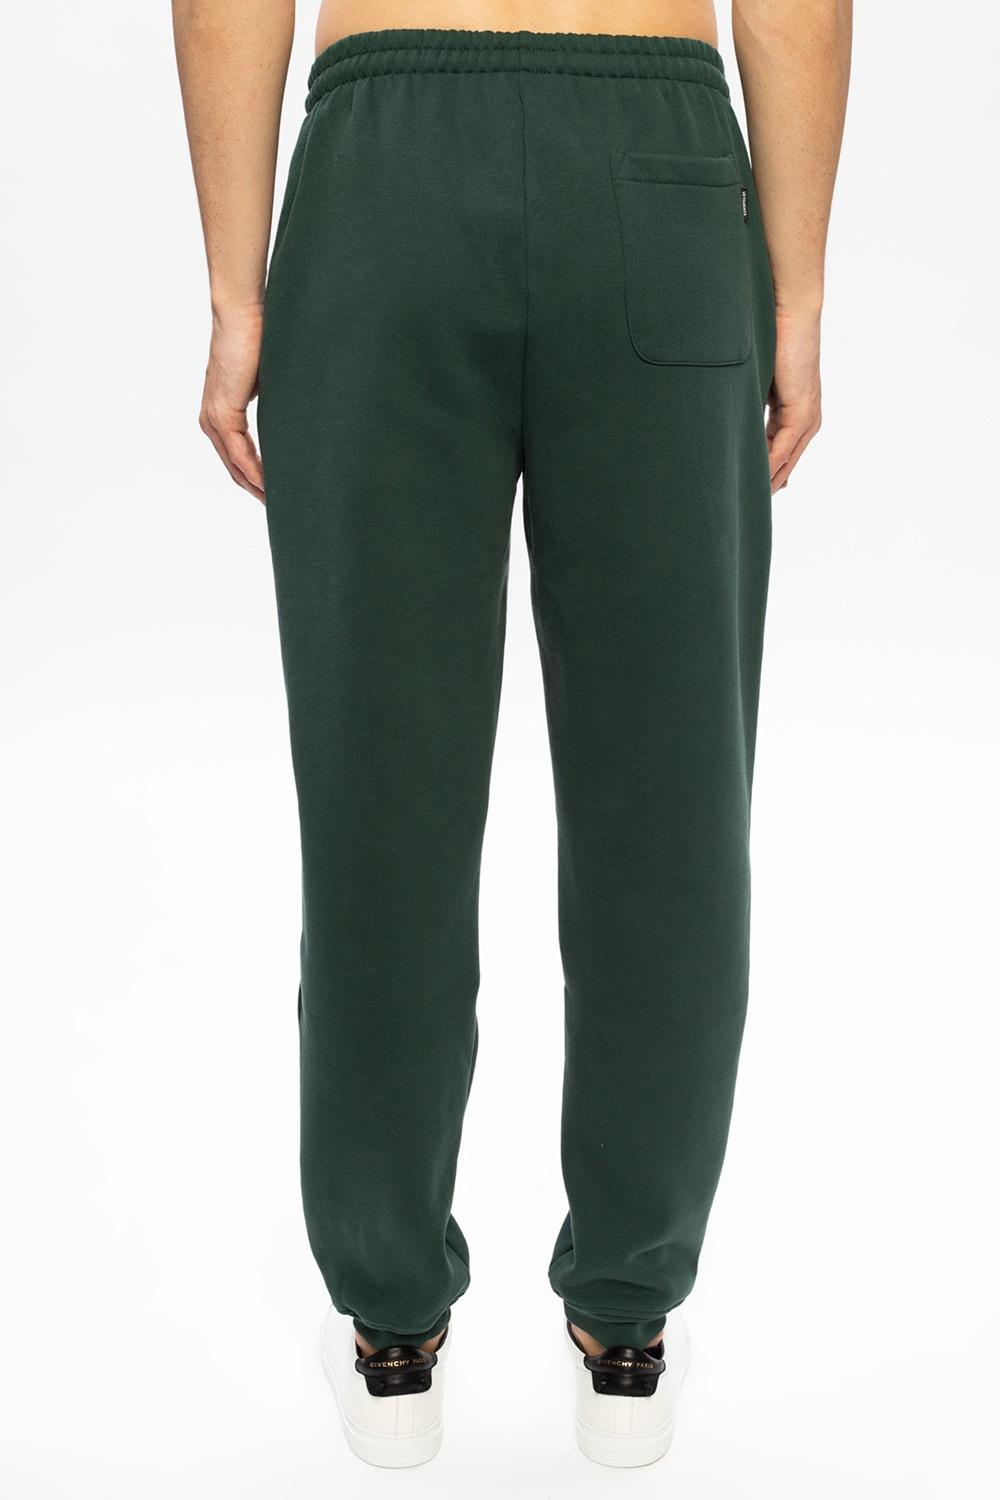 Vetements Cotton Logo Sweatpants in Green for Men - Lyst